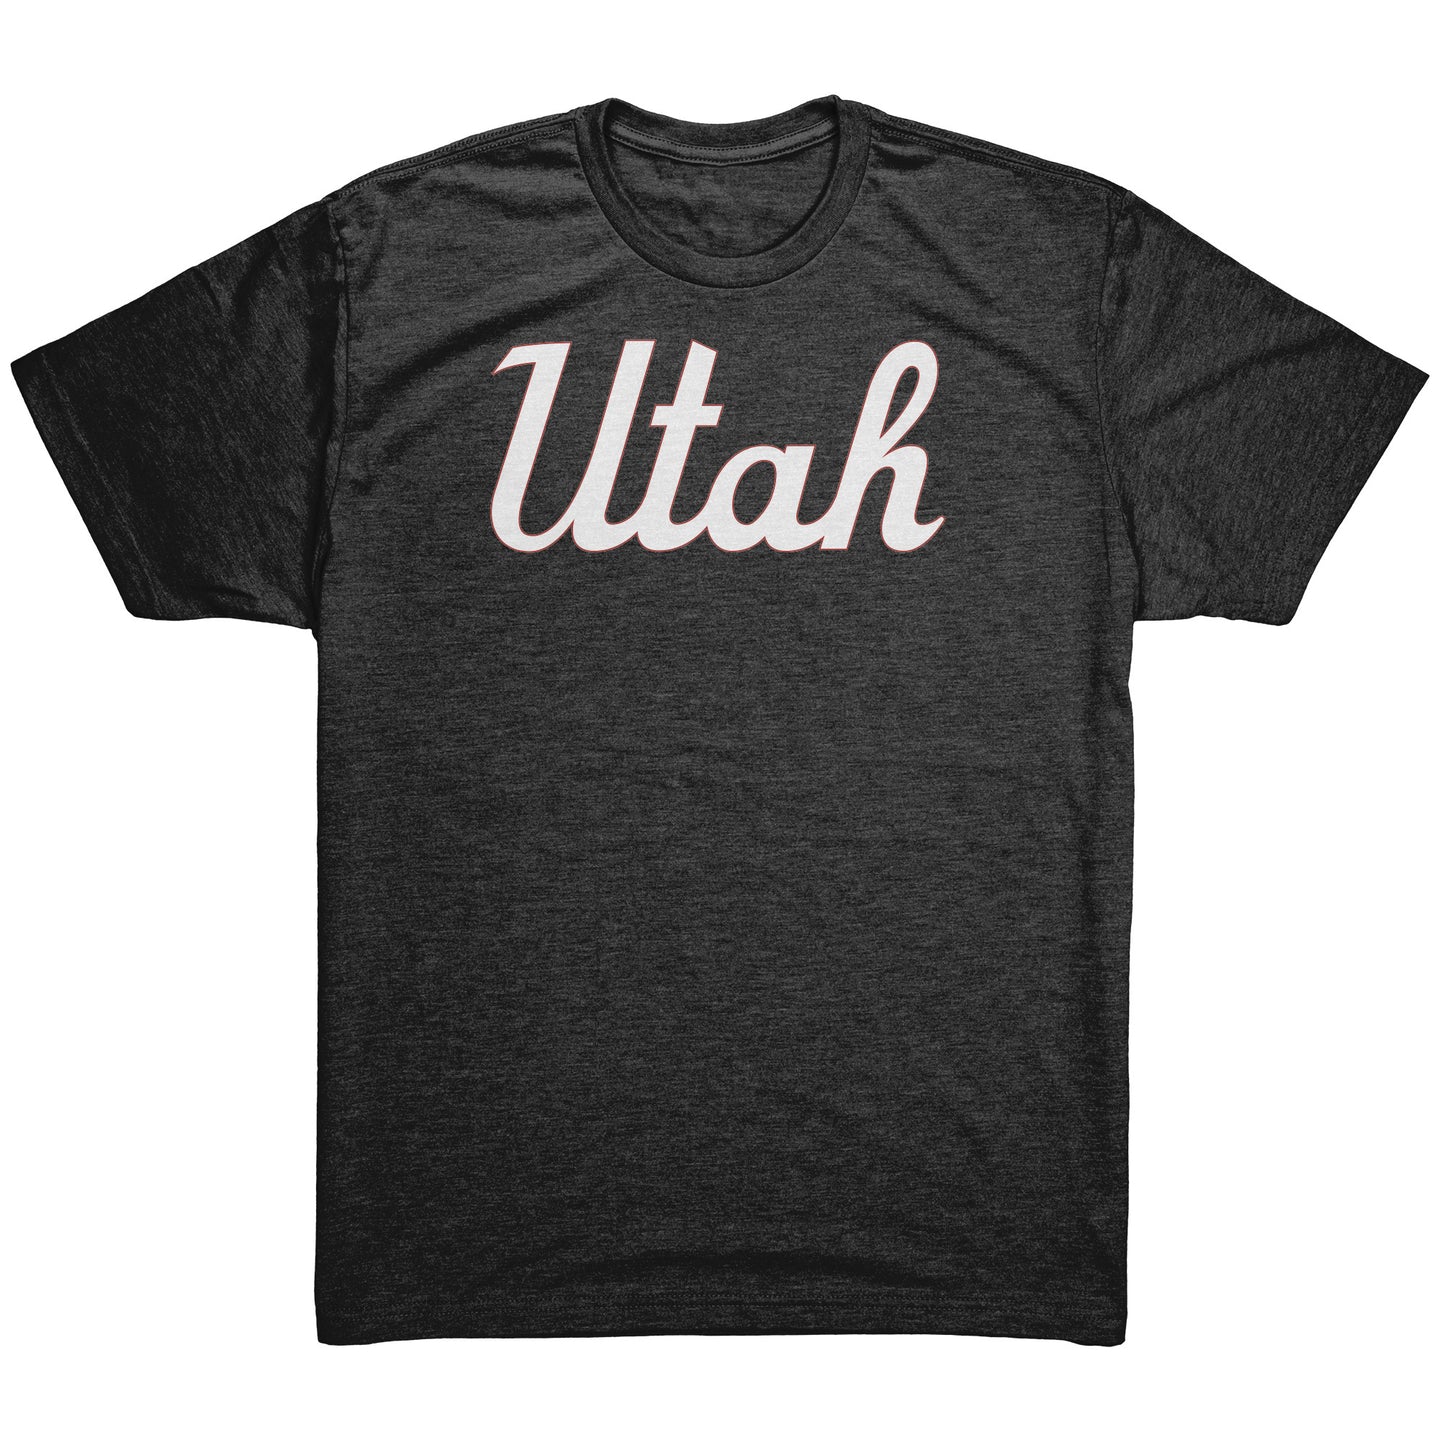 Men's Team Utah Vintage Black Triblend T-Shirt